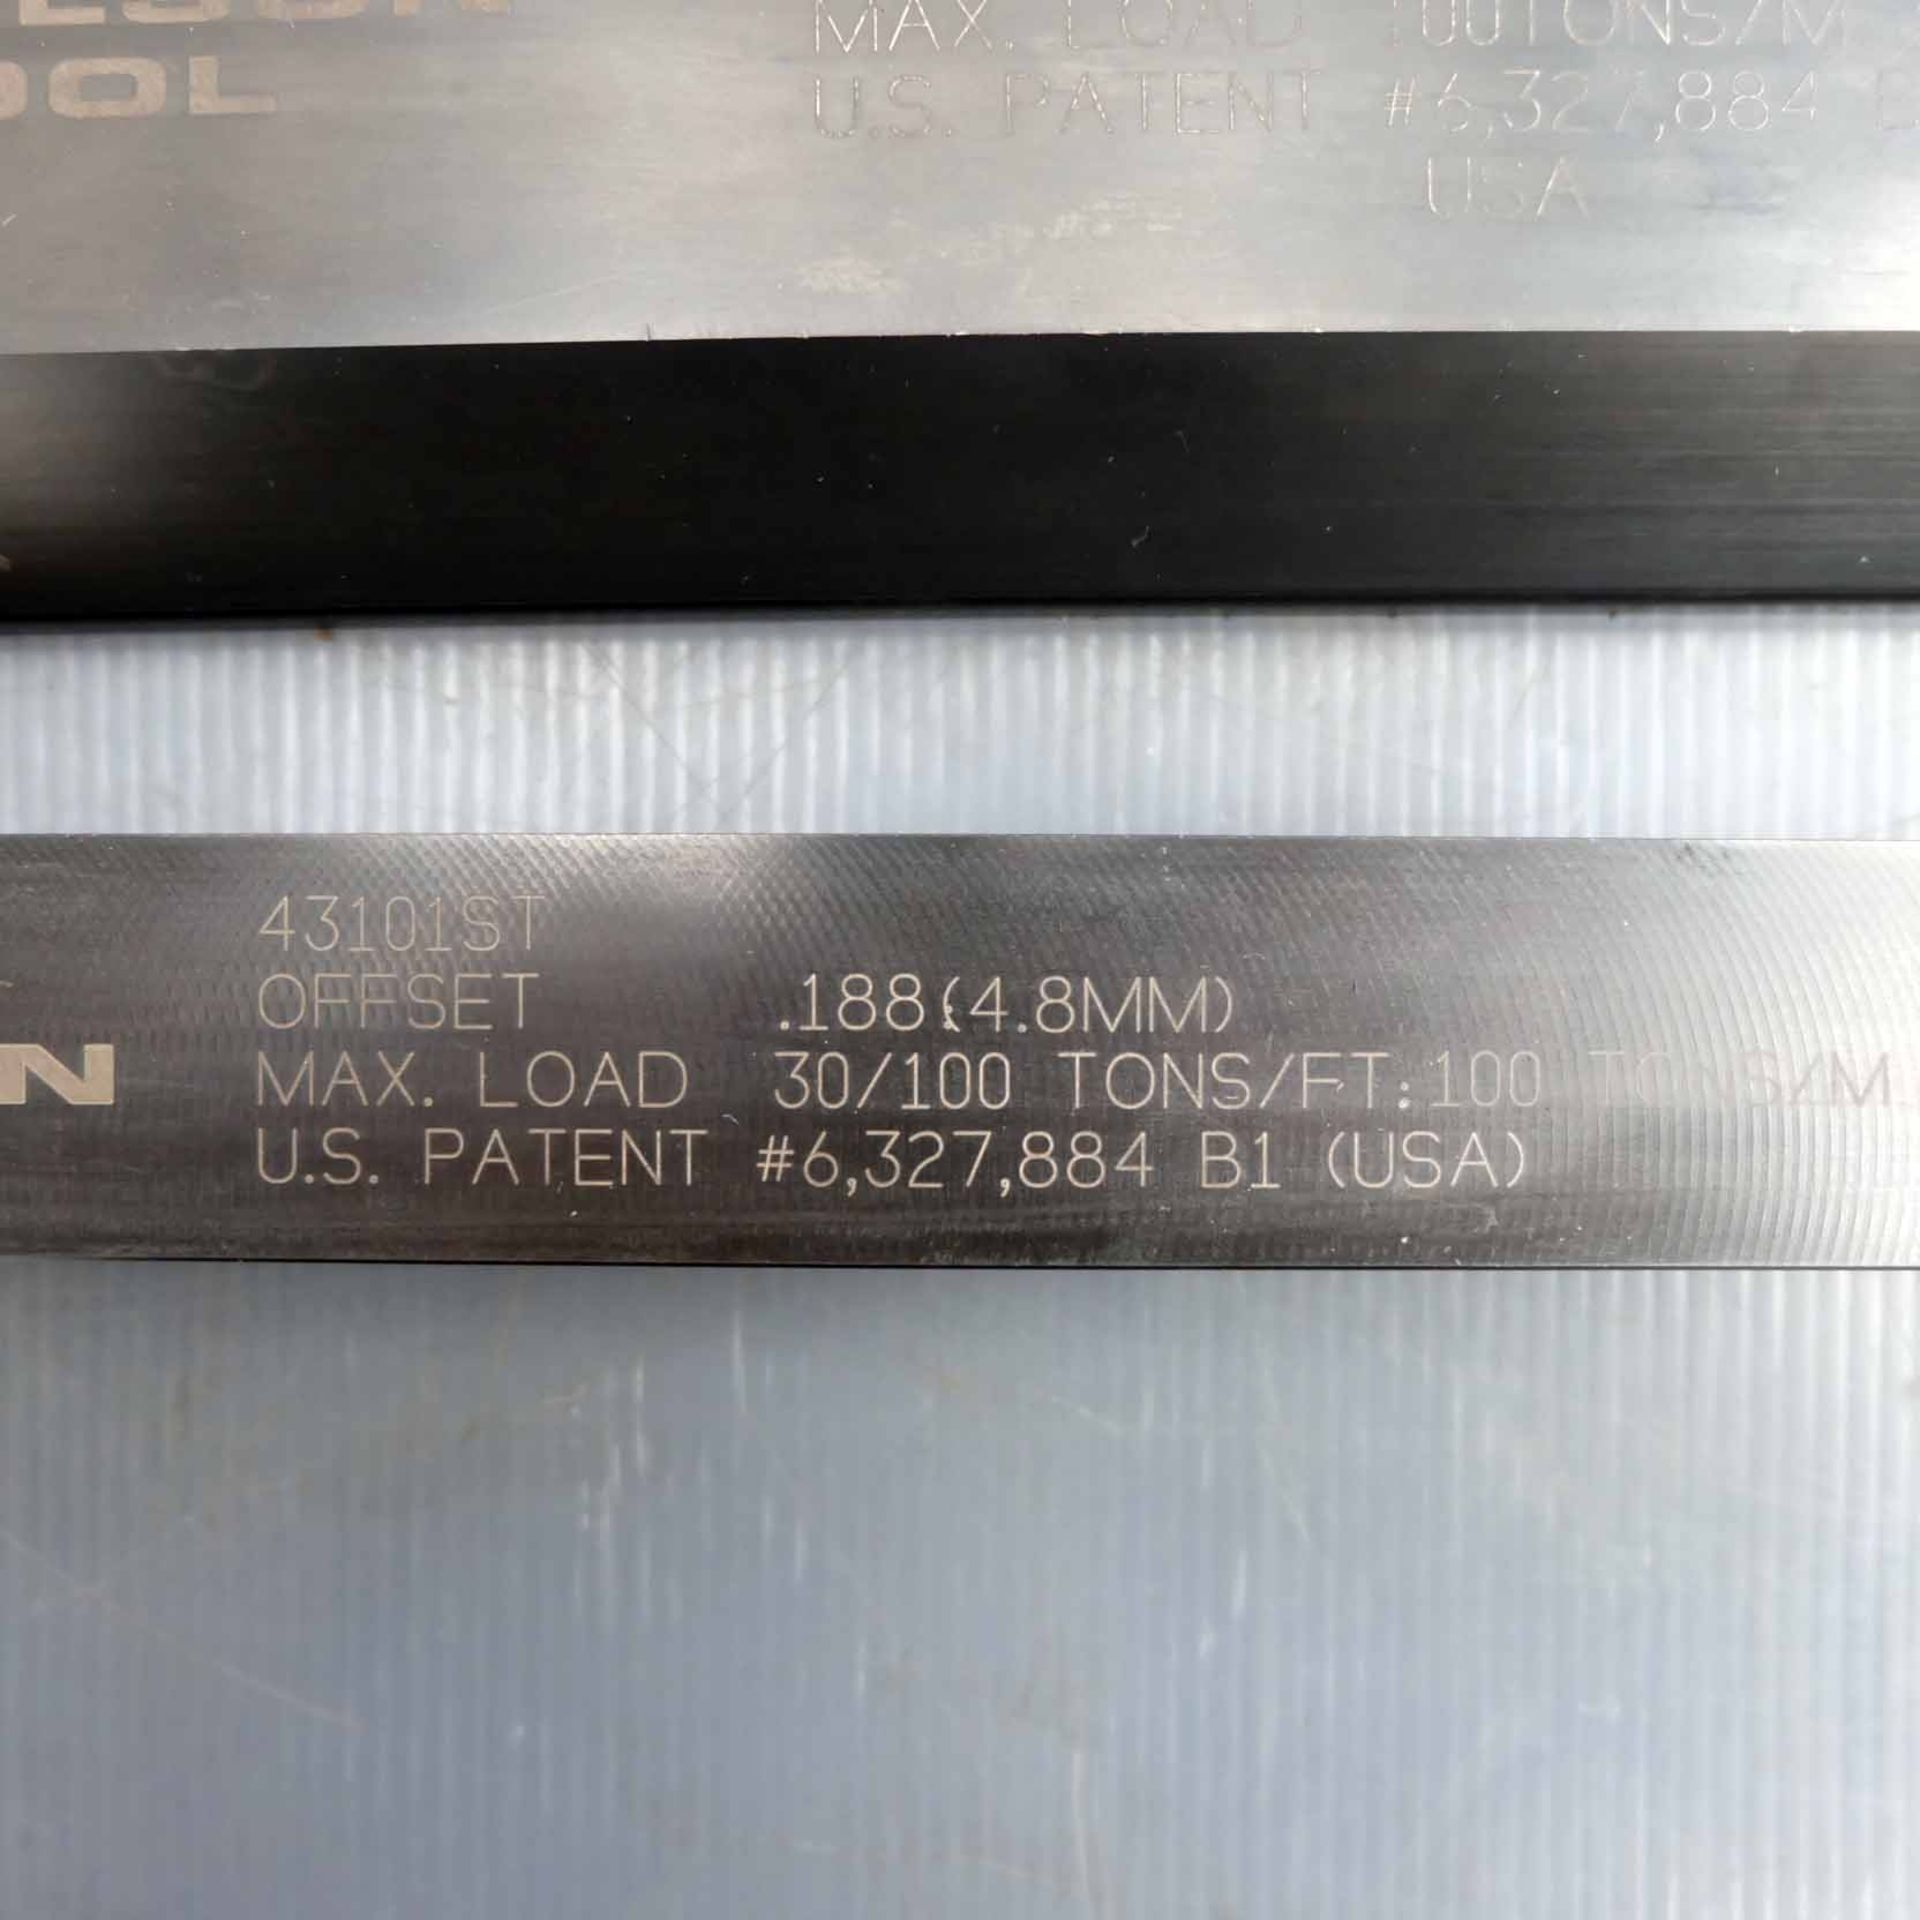 Wilson Tool USA Model 43101ST Offset 4.8mm Top & Bottom Press Brake Tooling. 415mm Long. Top Tool 90 - Bild 4 aus 9